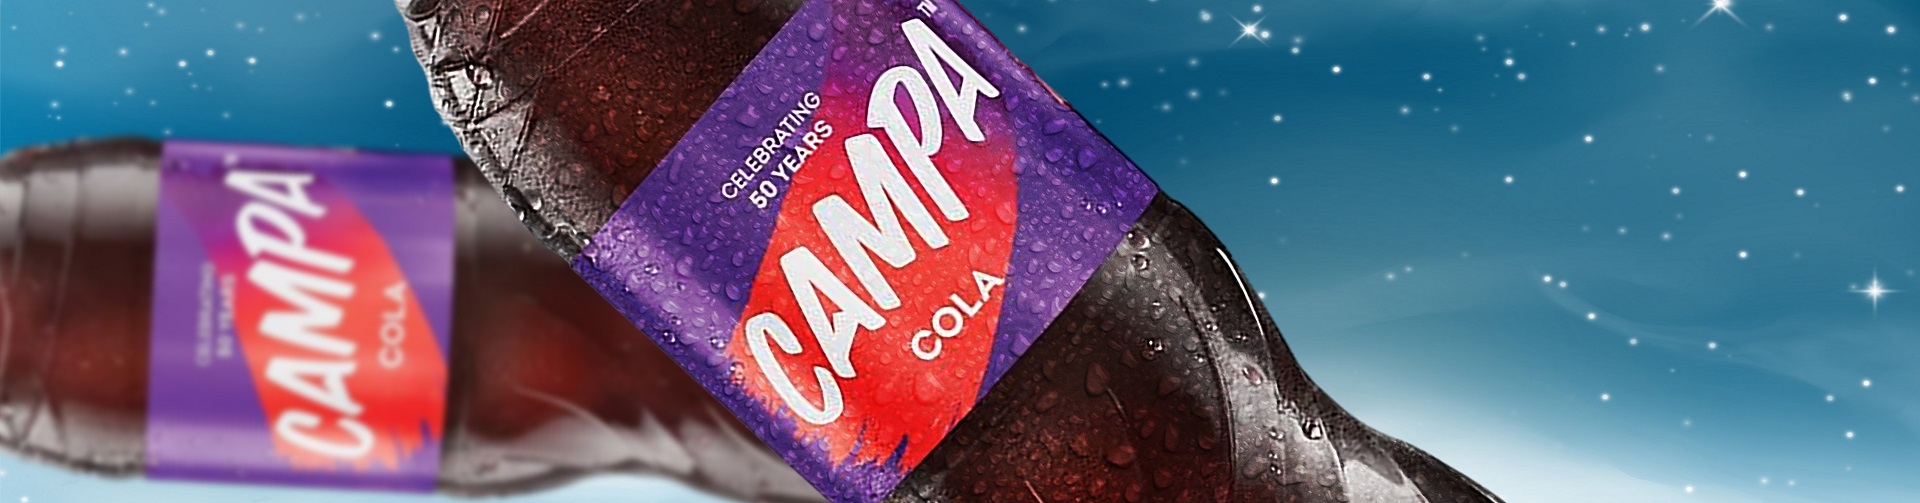 Banner showcasing Campa Cola's unique flavor